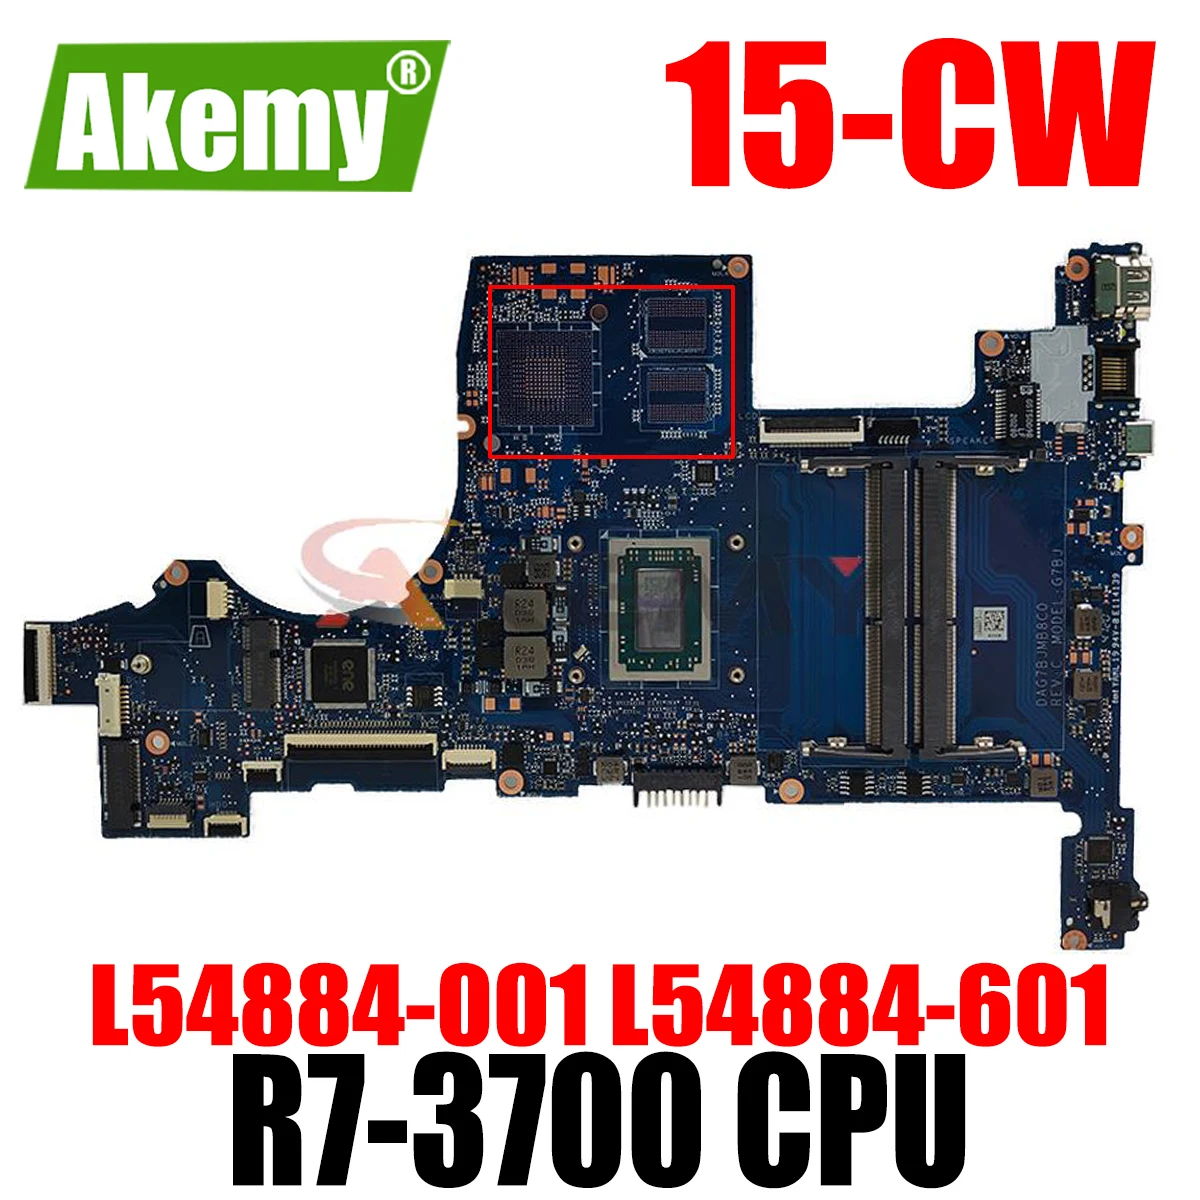 

L54884-001 L54884-601 For HP Pavillion 15-CW Laptop Motherboard 15Z-CW TPN-Q210 DAG7BJMB8C0 G7BJ DAG7BFMB8D0 Mainboard R7-3700